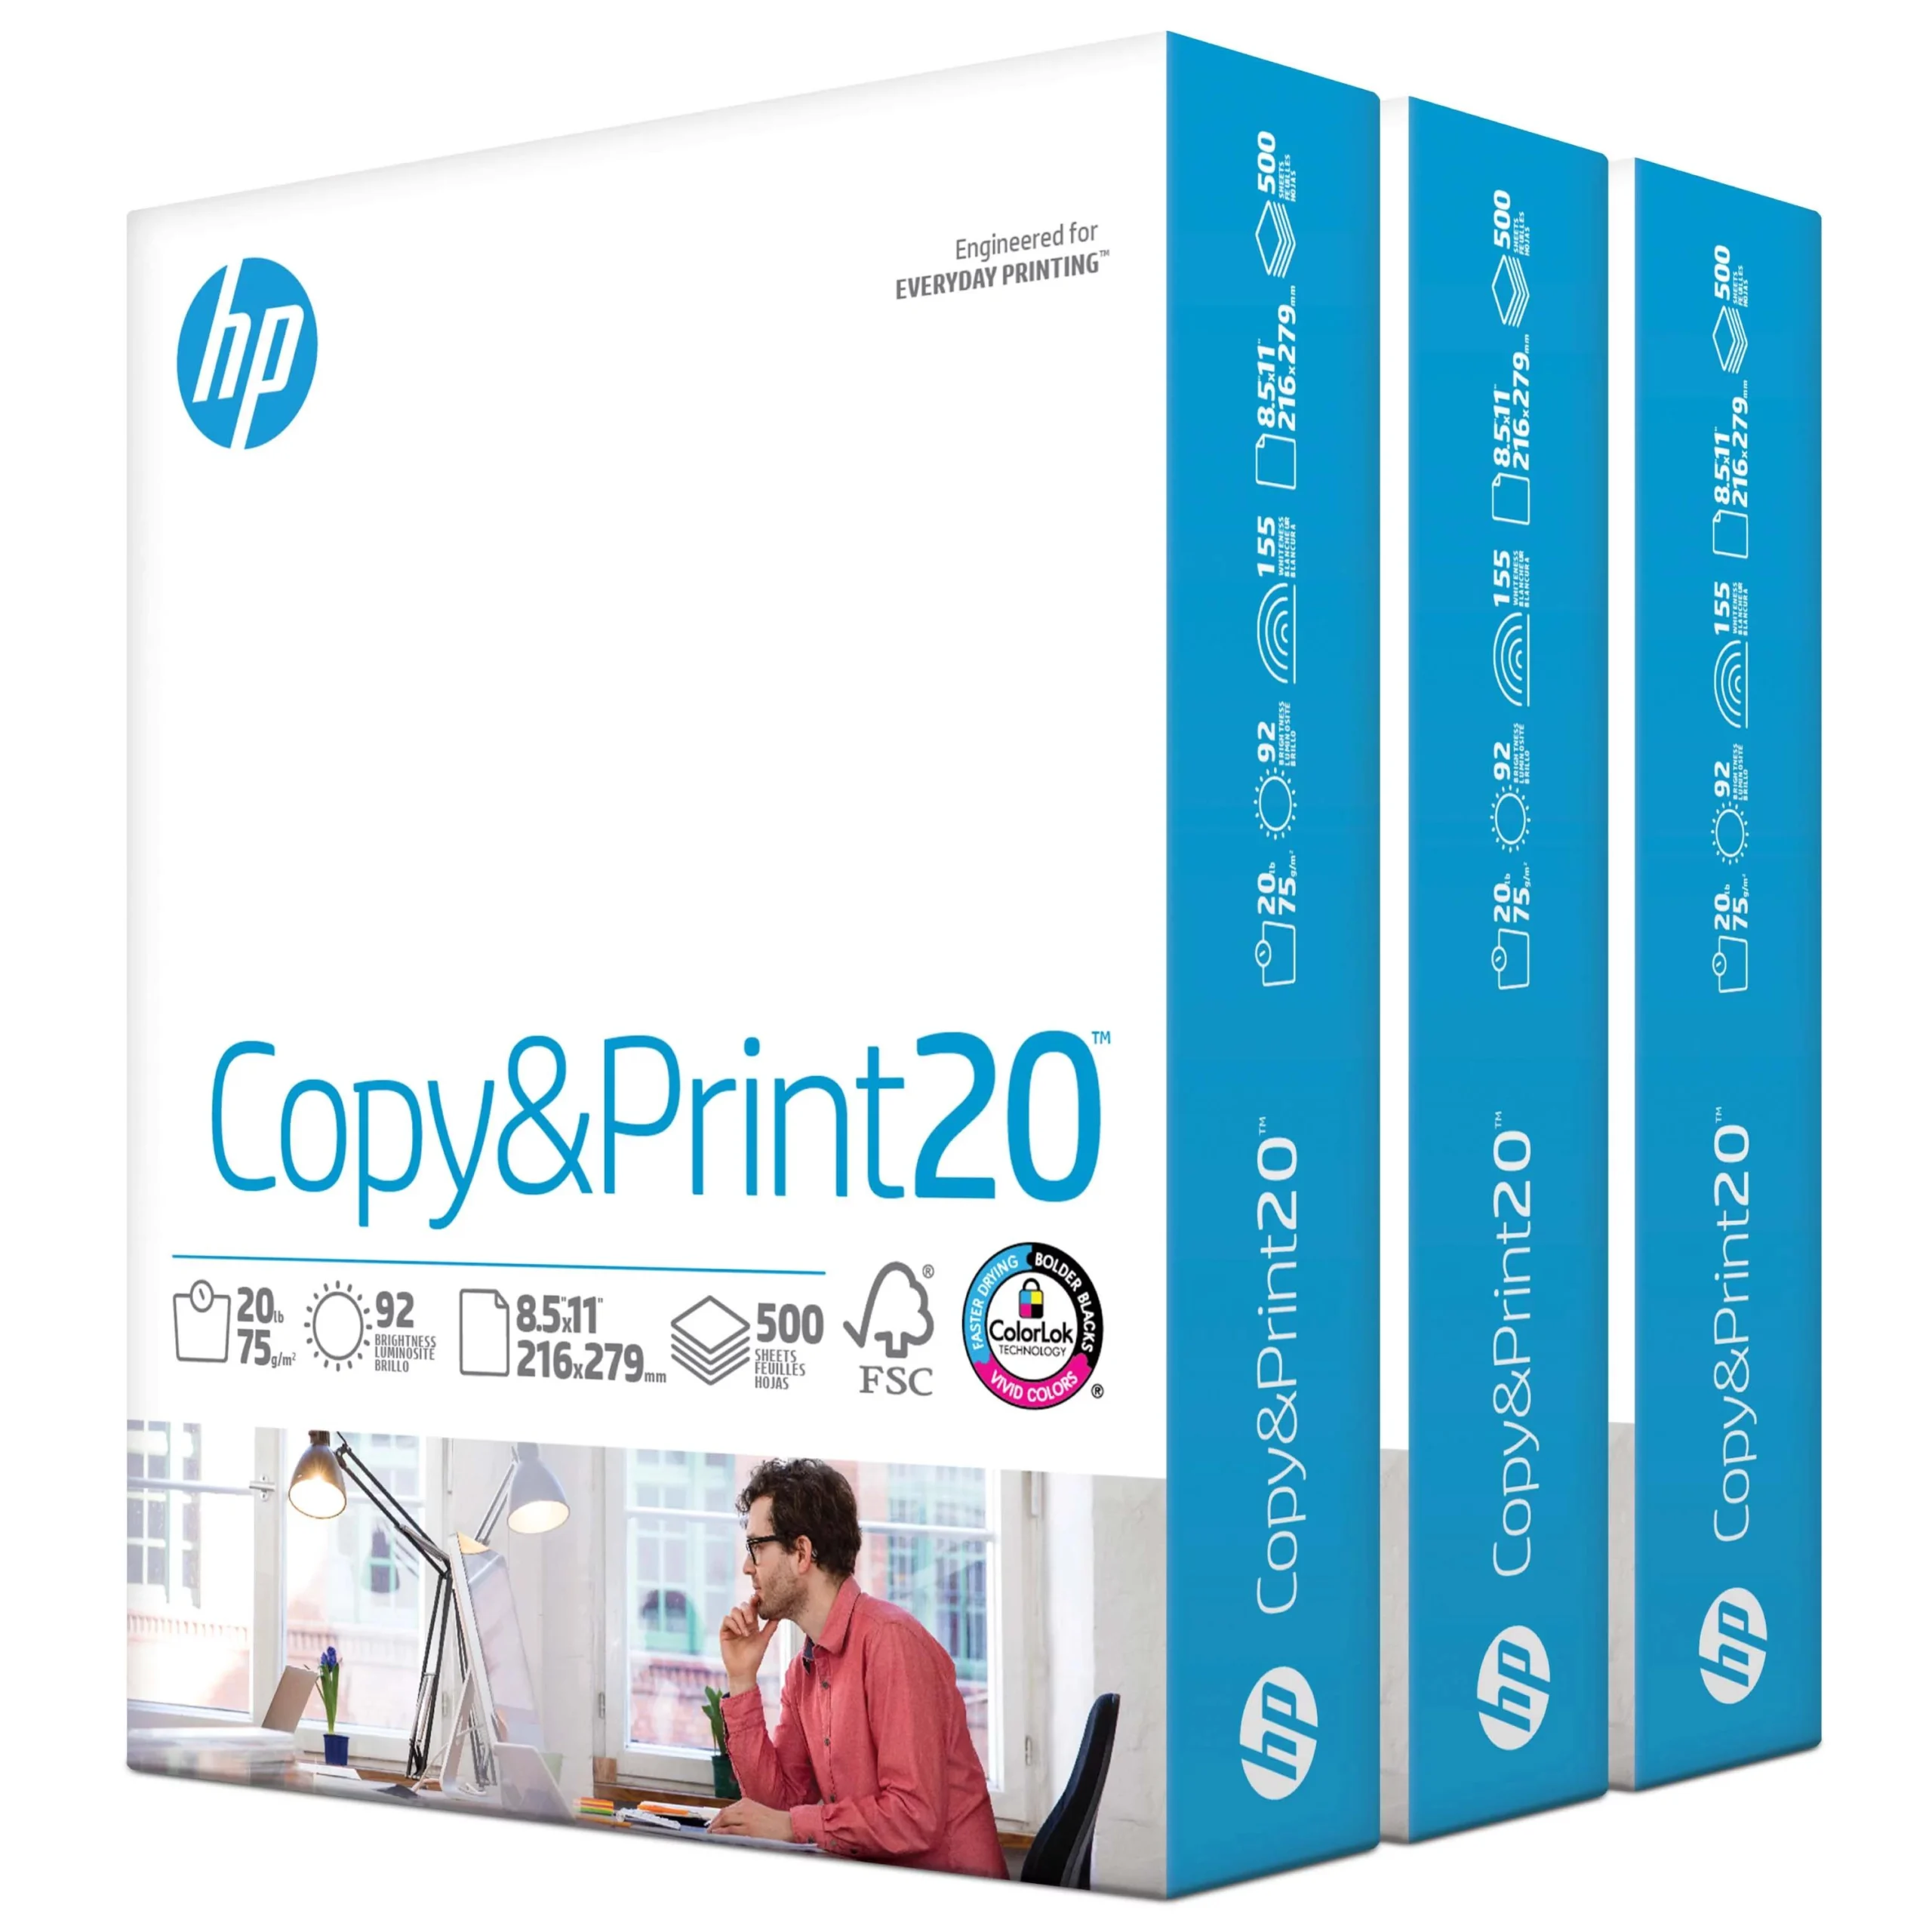 hewlett packard printing paper - How do I fix my HP printer paper